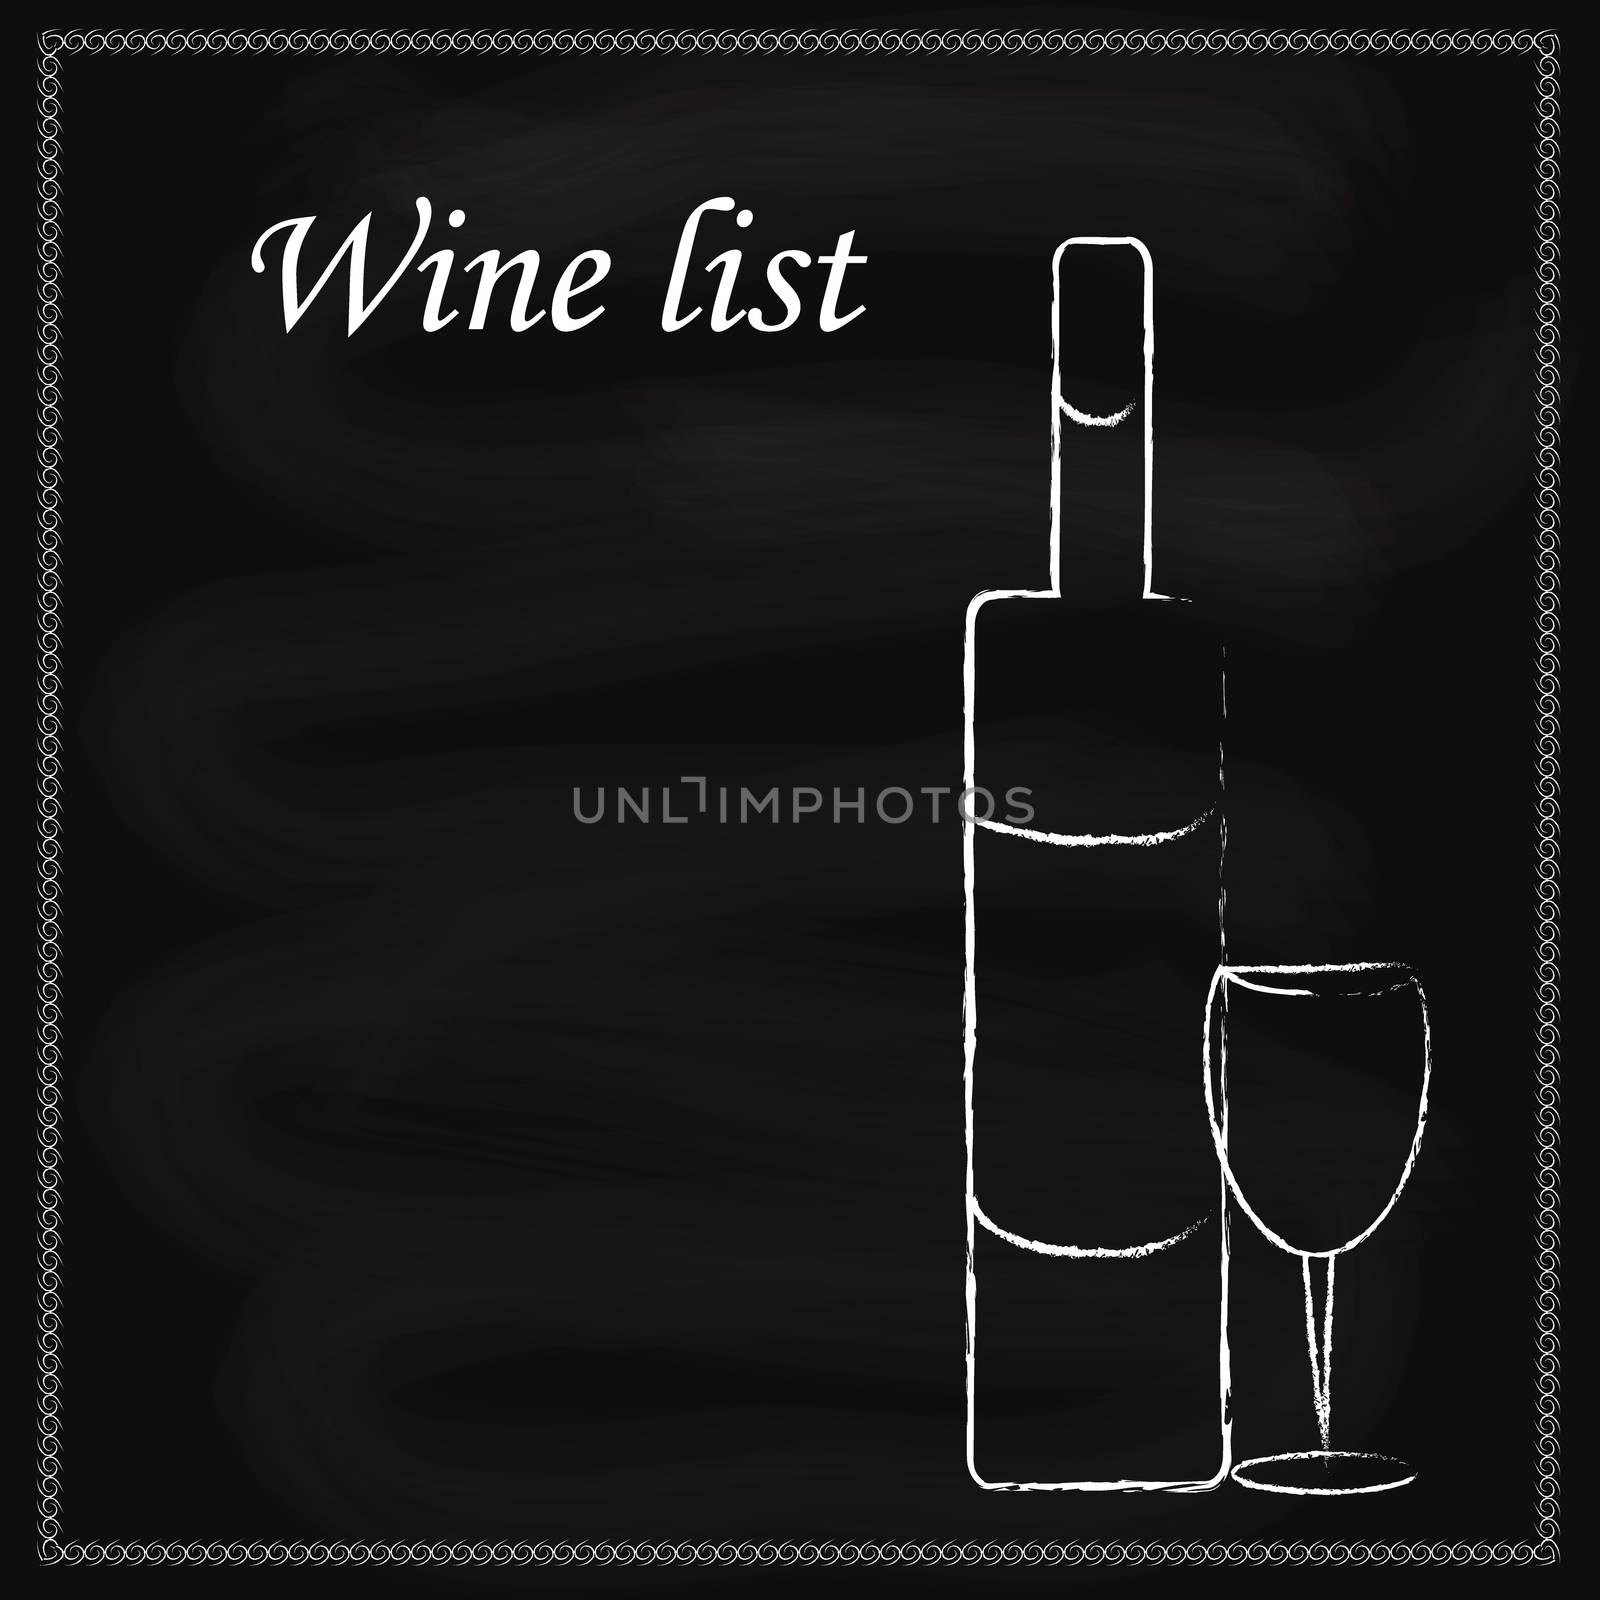 Wine list by rinika